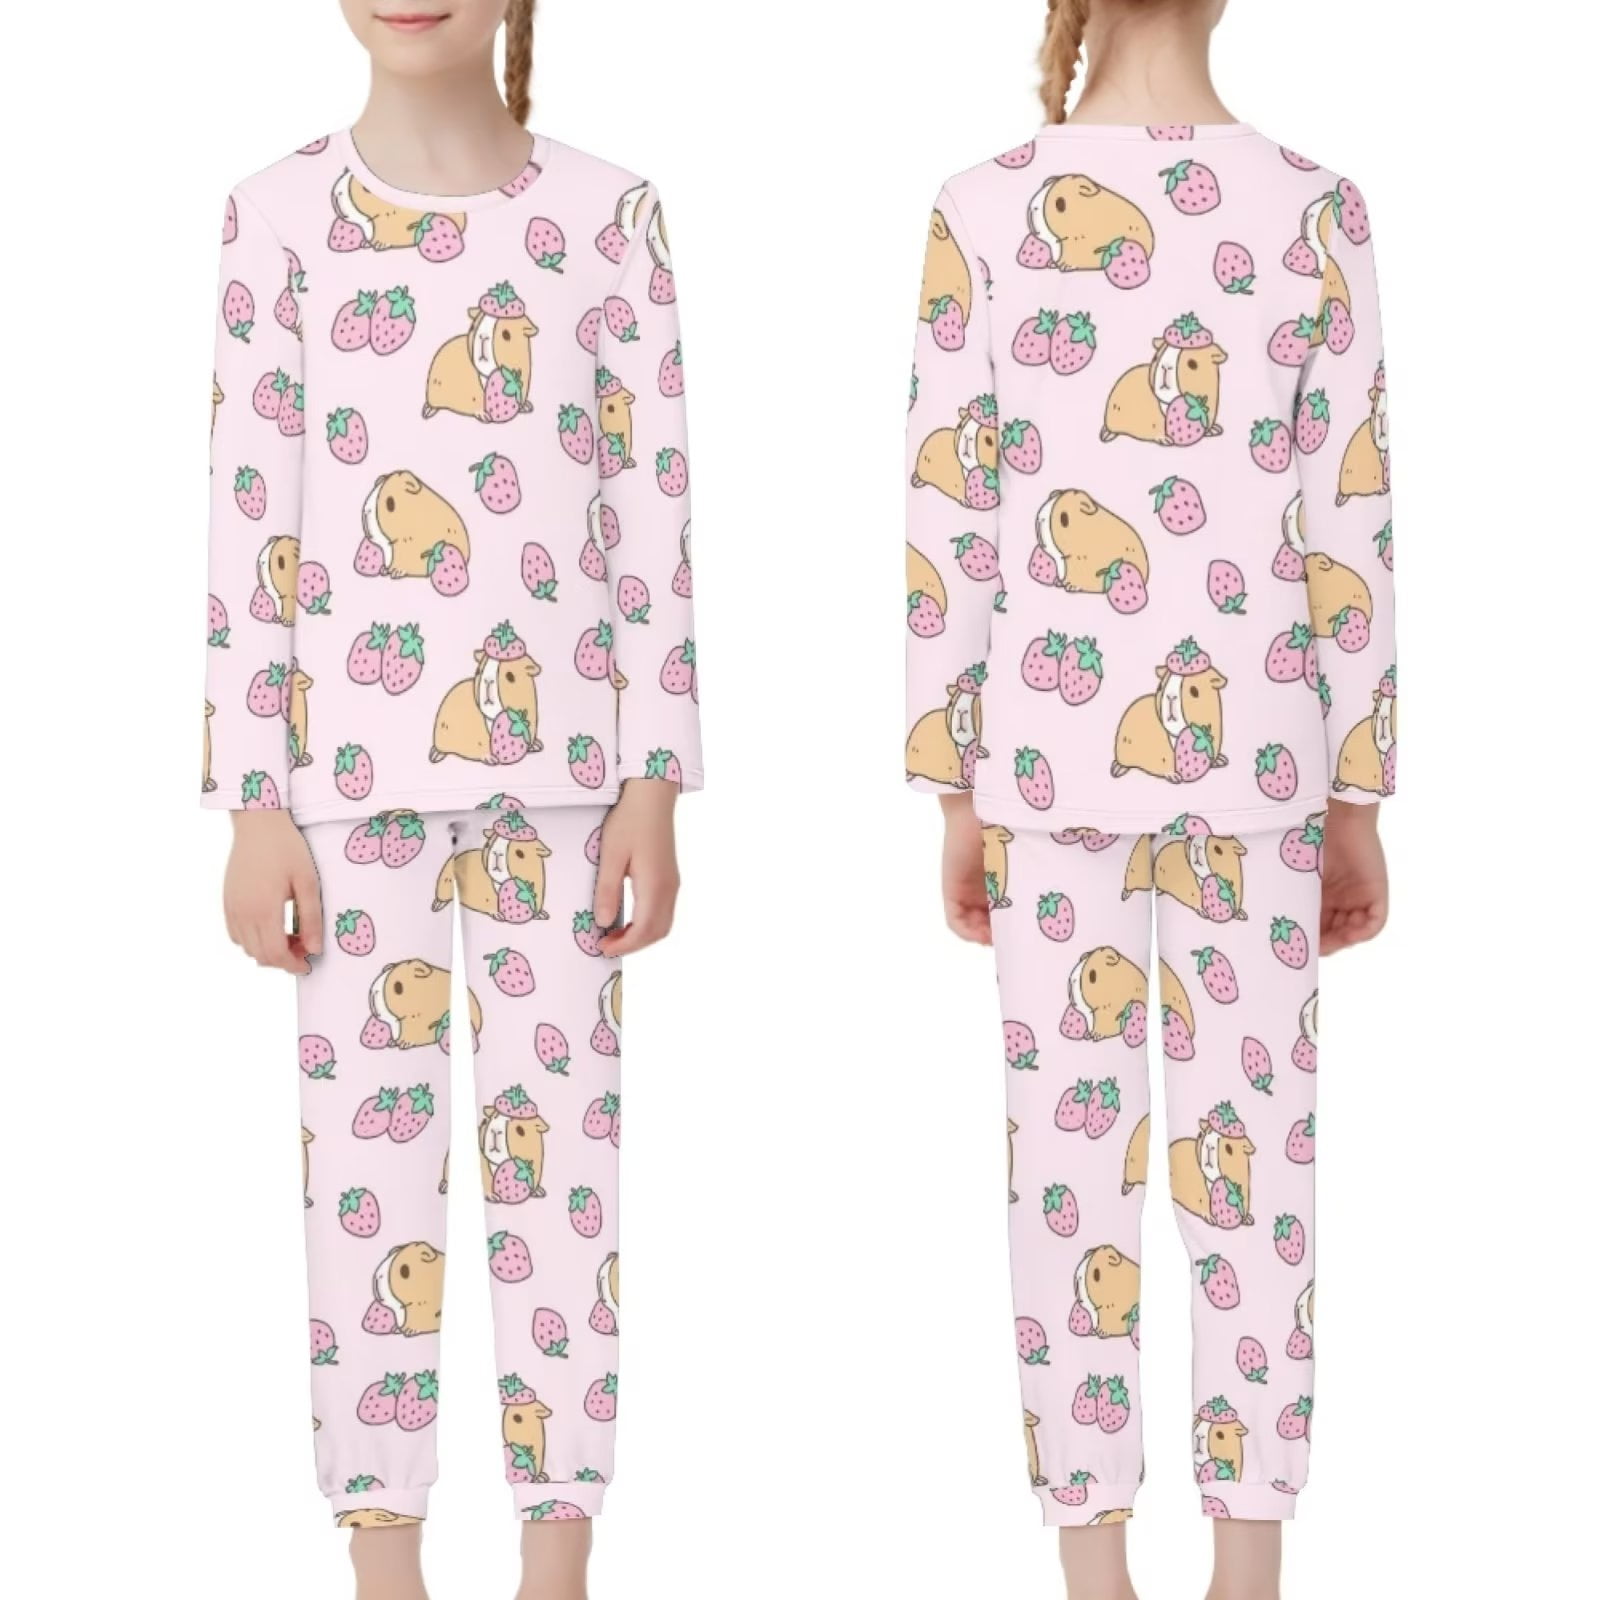 Renewold Breathable Kid Corgi Dog Pjs for Teen Girls Pink Pajama Top 2 Pack  Long Sleeve Loungewear Warmth Nightwear Set Thermal Sweatsuit Sleepwear